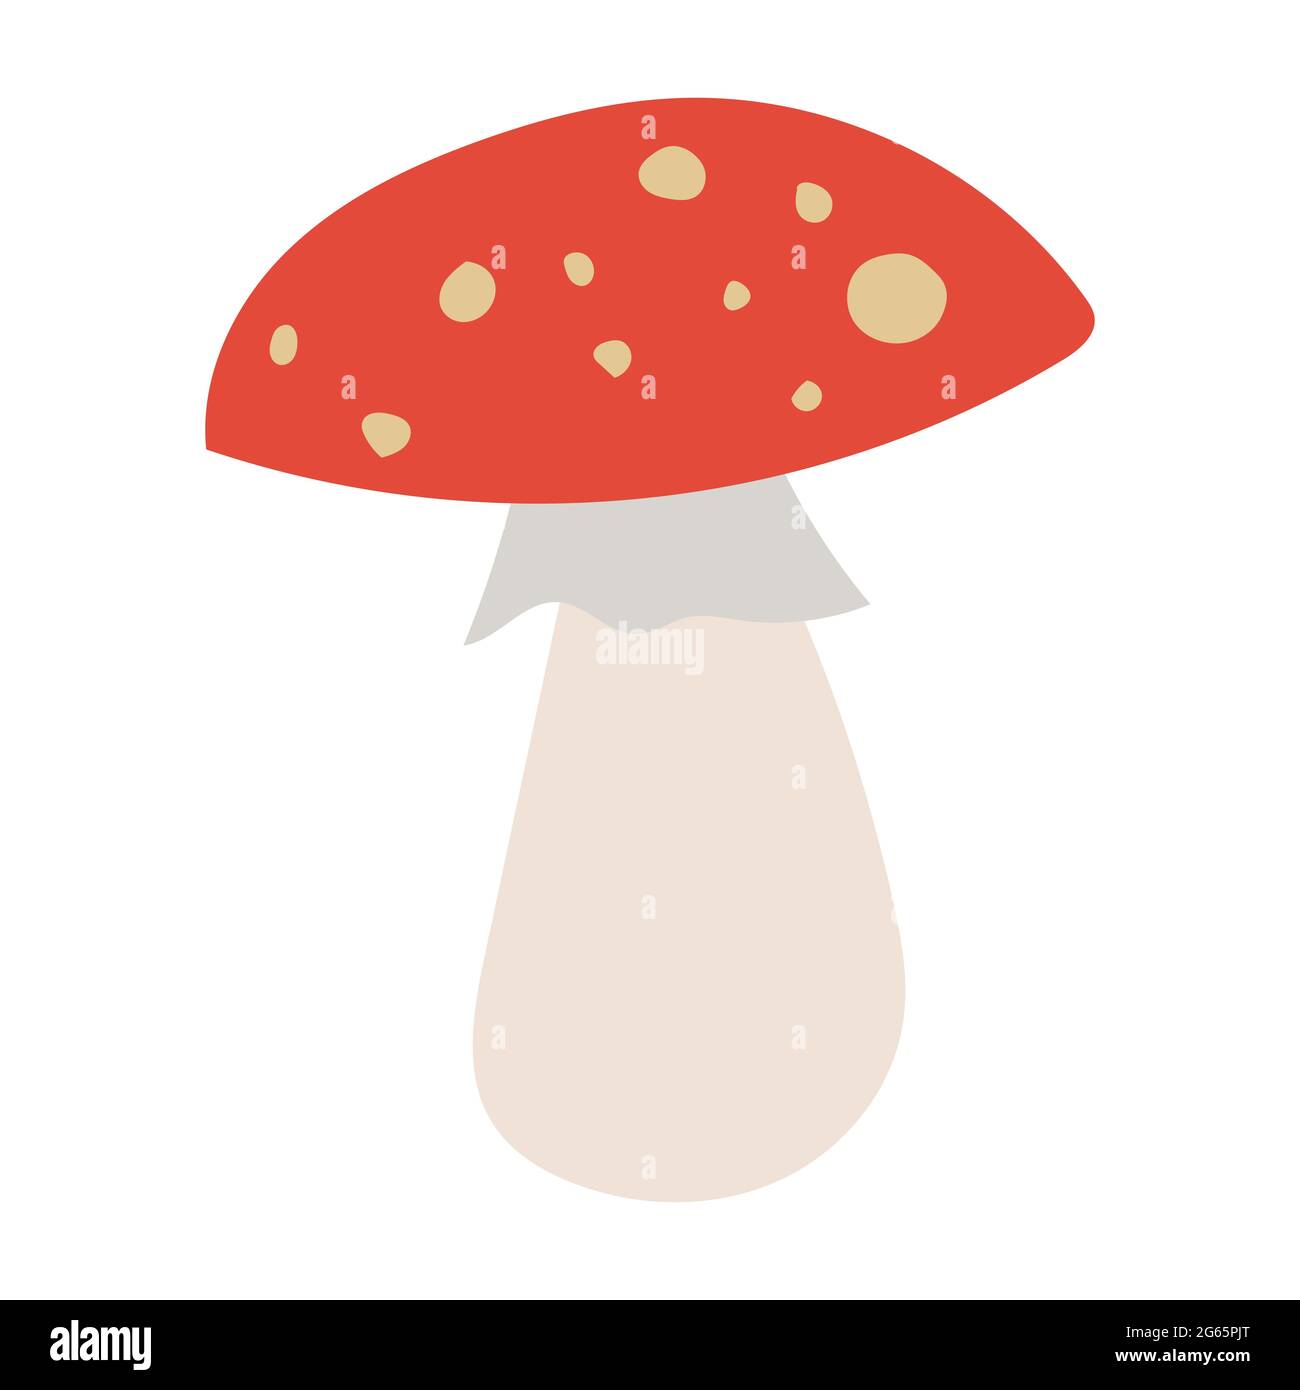 Amanita. Poisonous Mushroom hand drawn style icon Stock Vector